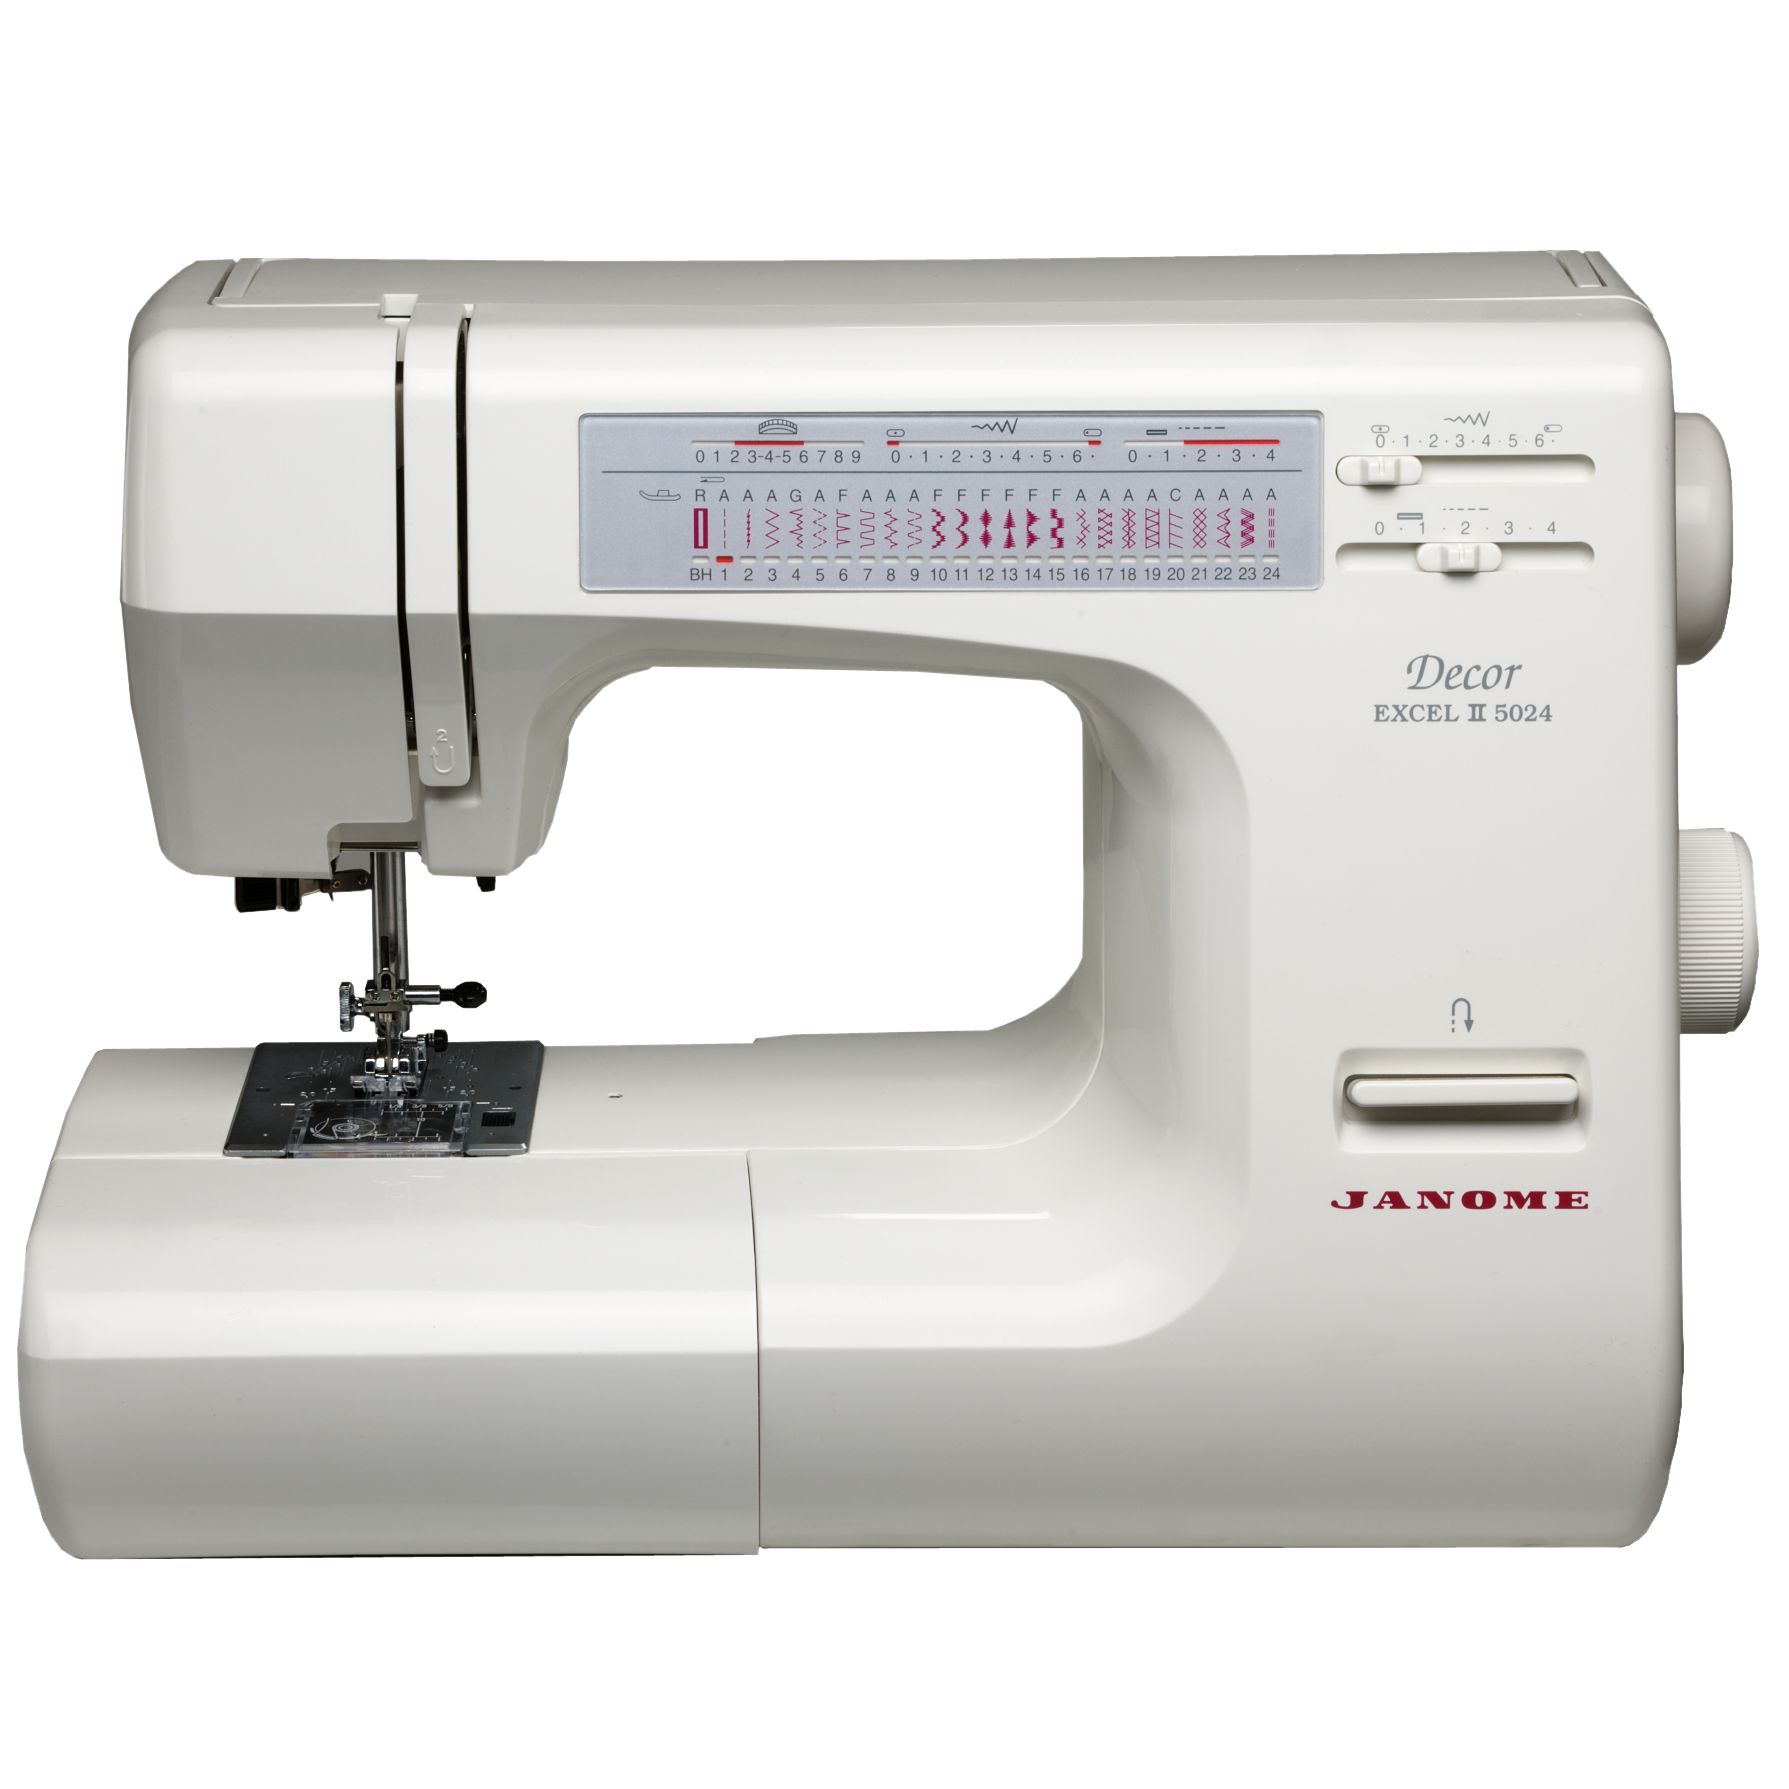 Janome Excel 5024 Sewing Machine at John Lewis